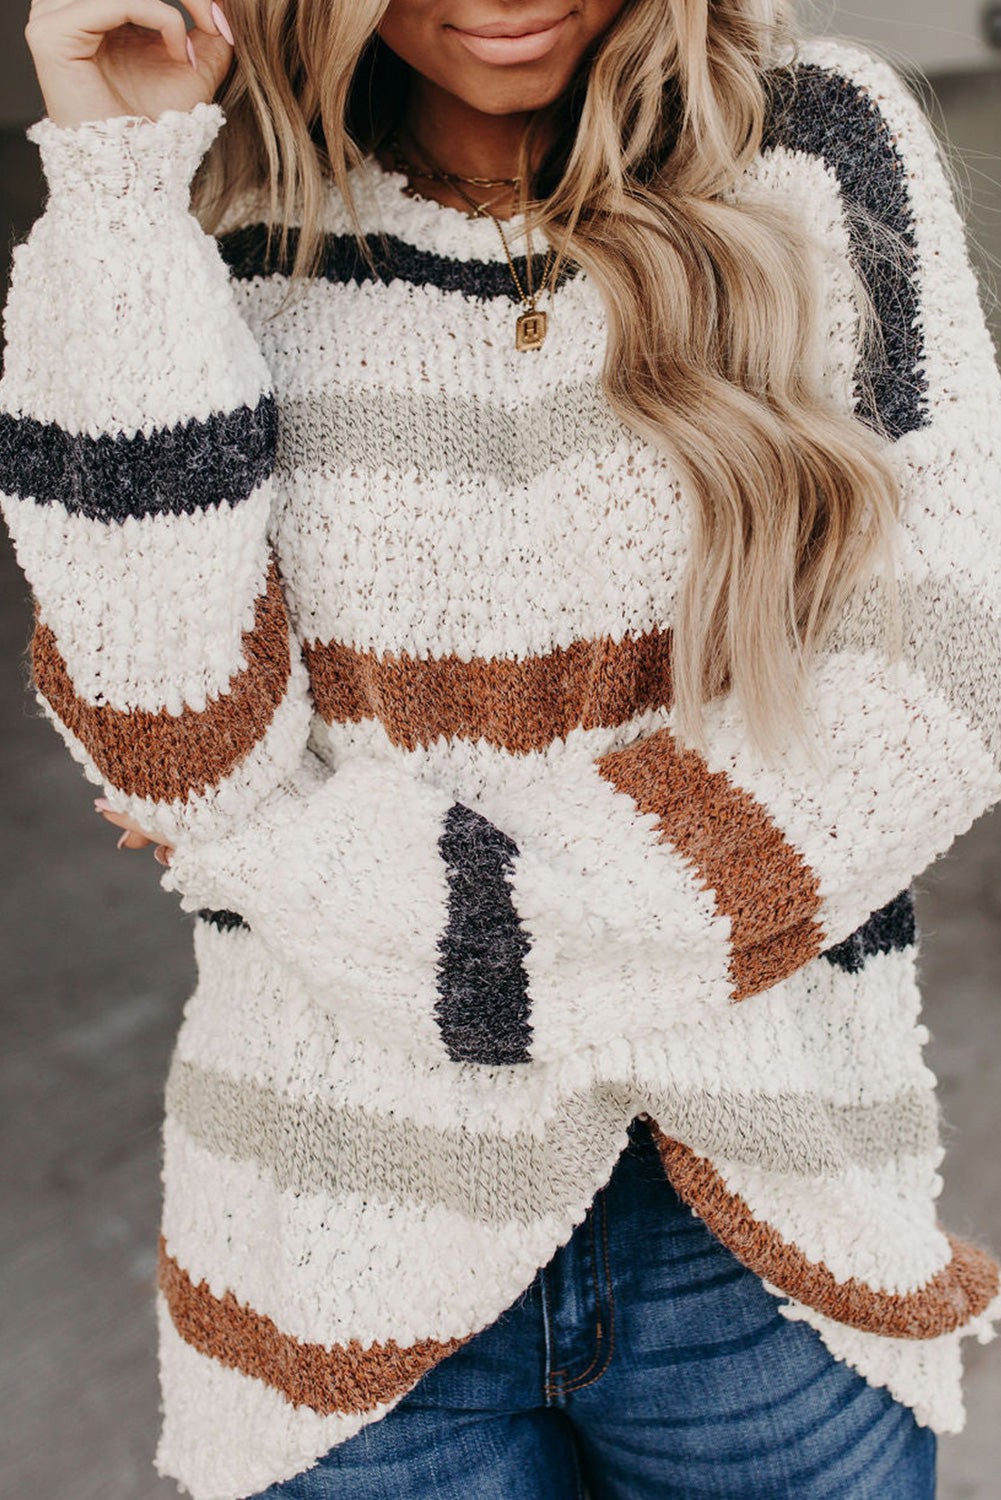 Multicolor Stripes Print Popcorn Drop Shoulder Pullover Sweater